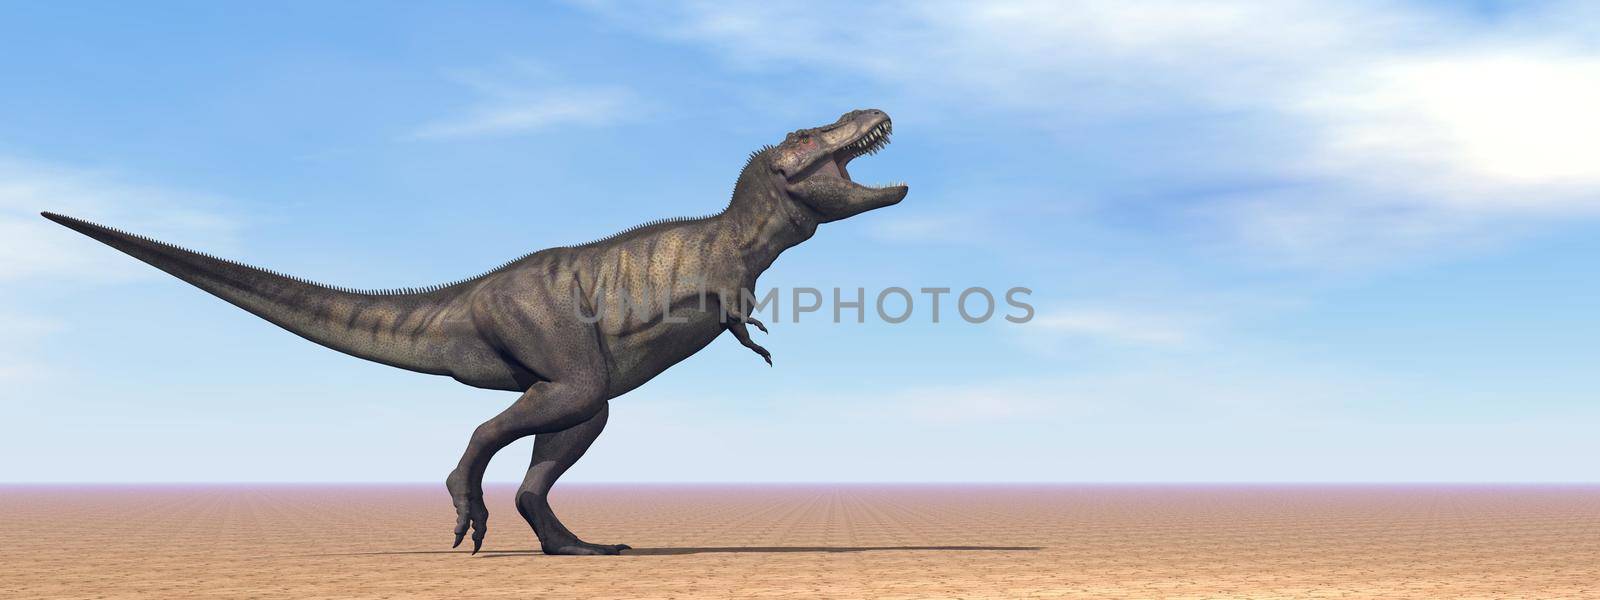 Tyrannosaurus dinosaur in the desert - 3D render by Elenaphotos21